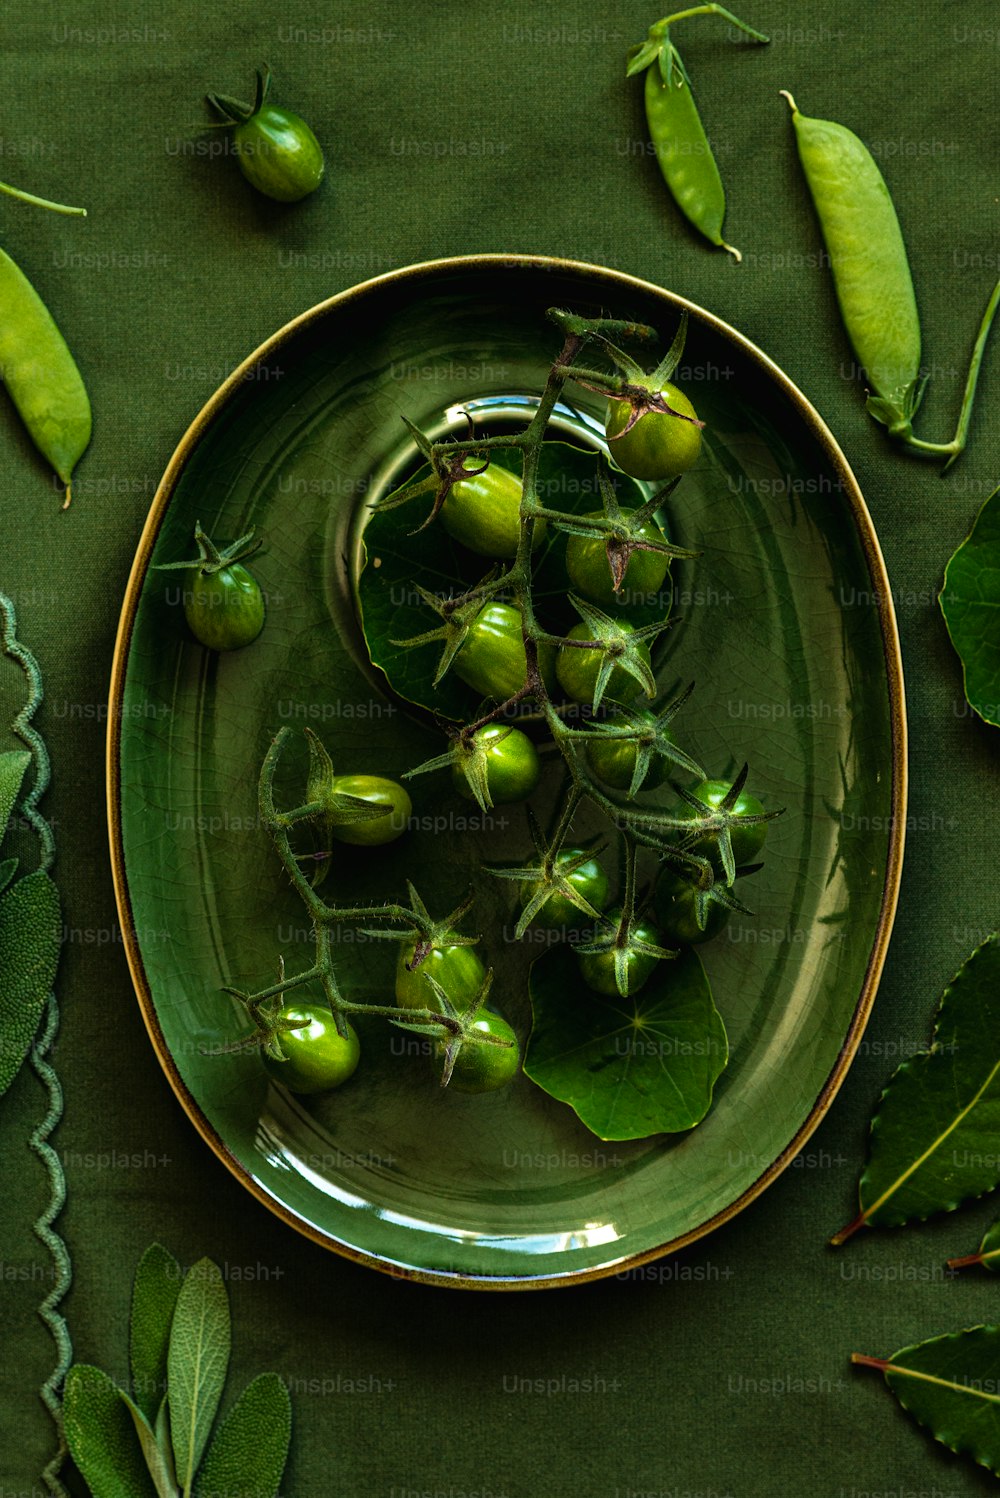 Un plato de verduras verdes sobre un mantel verde